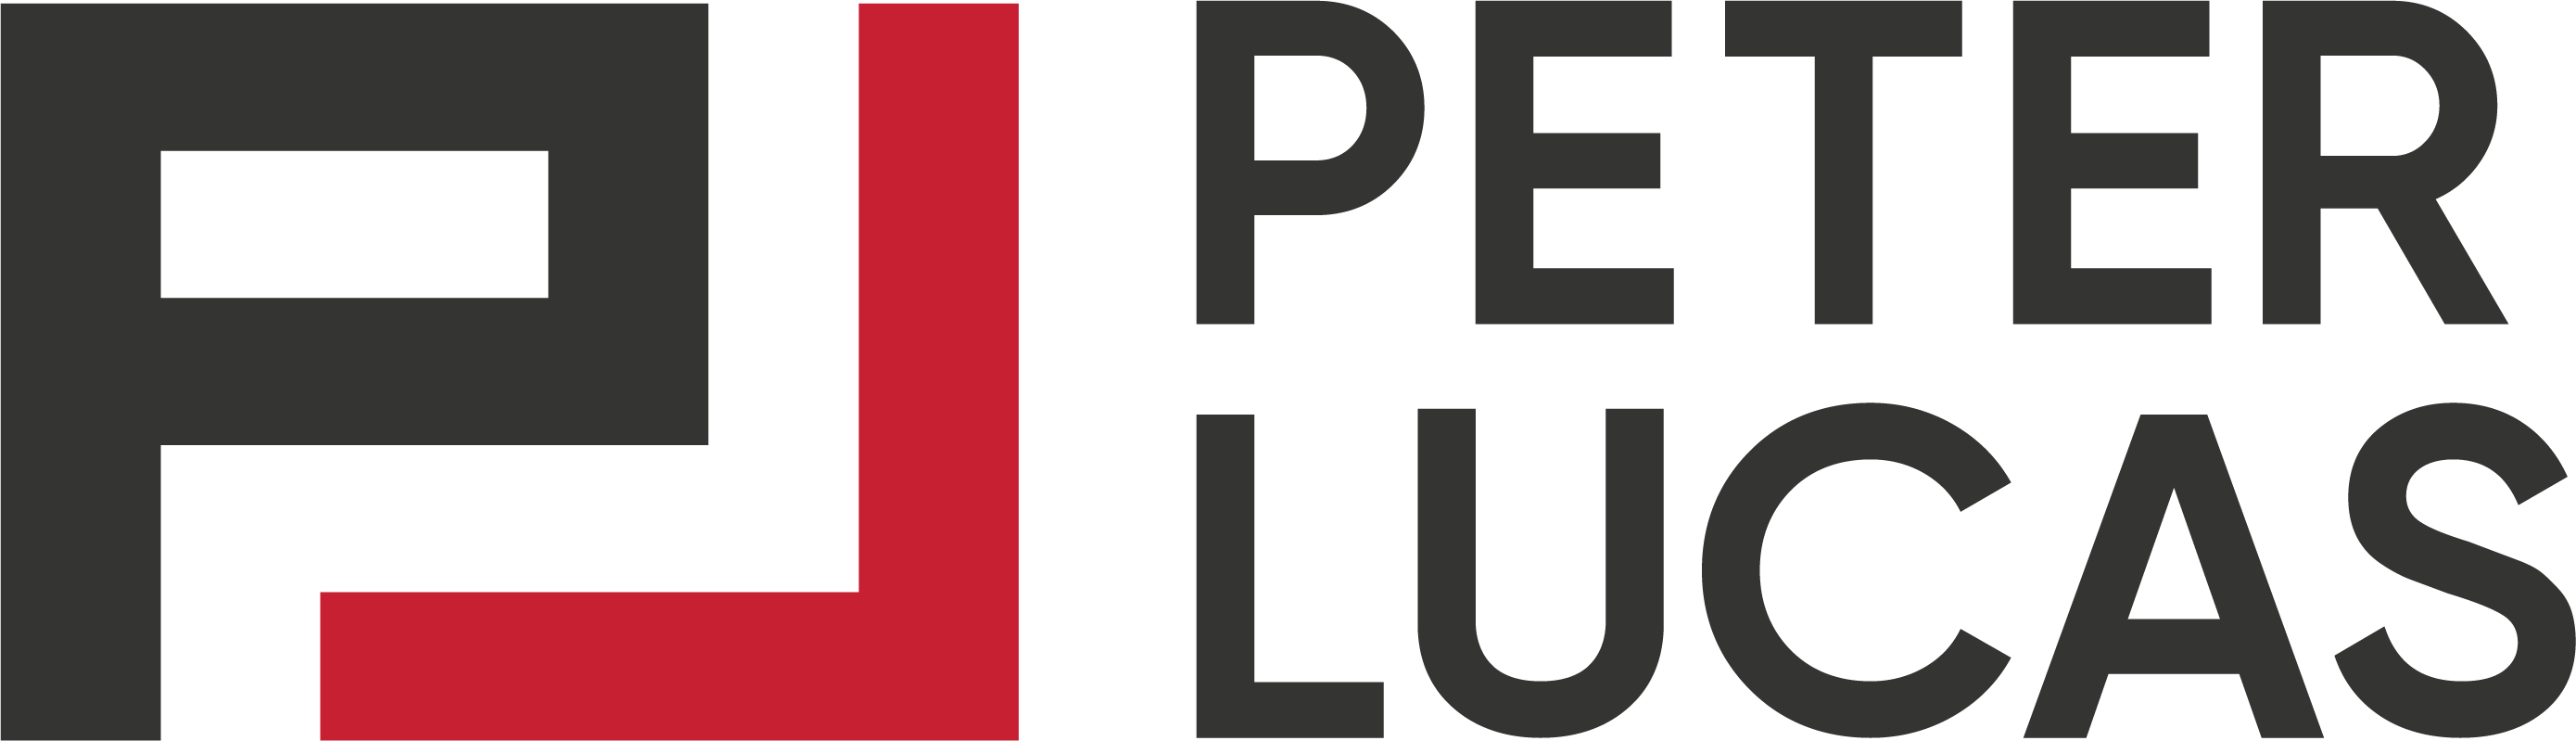 Peter Lucas logo